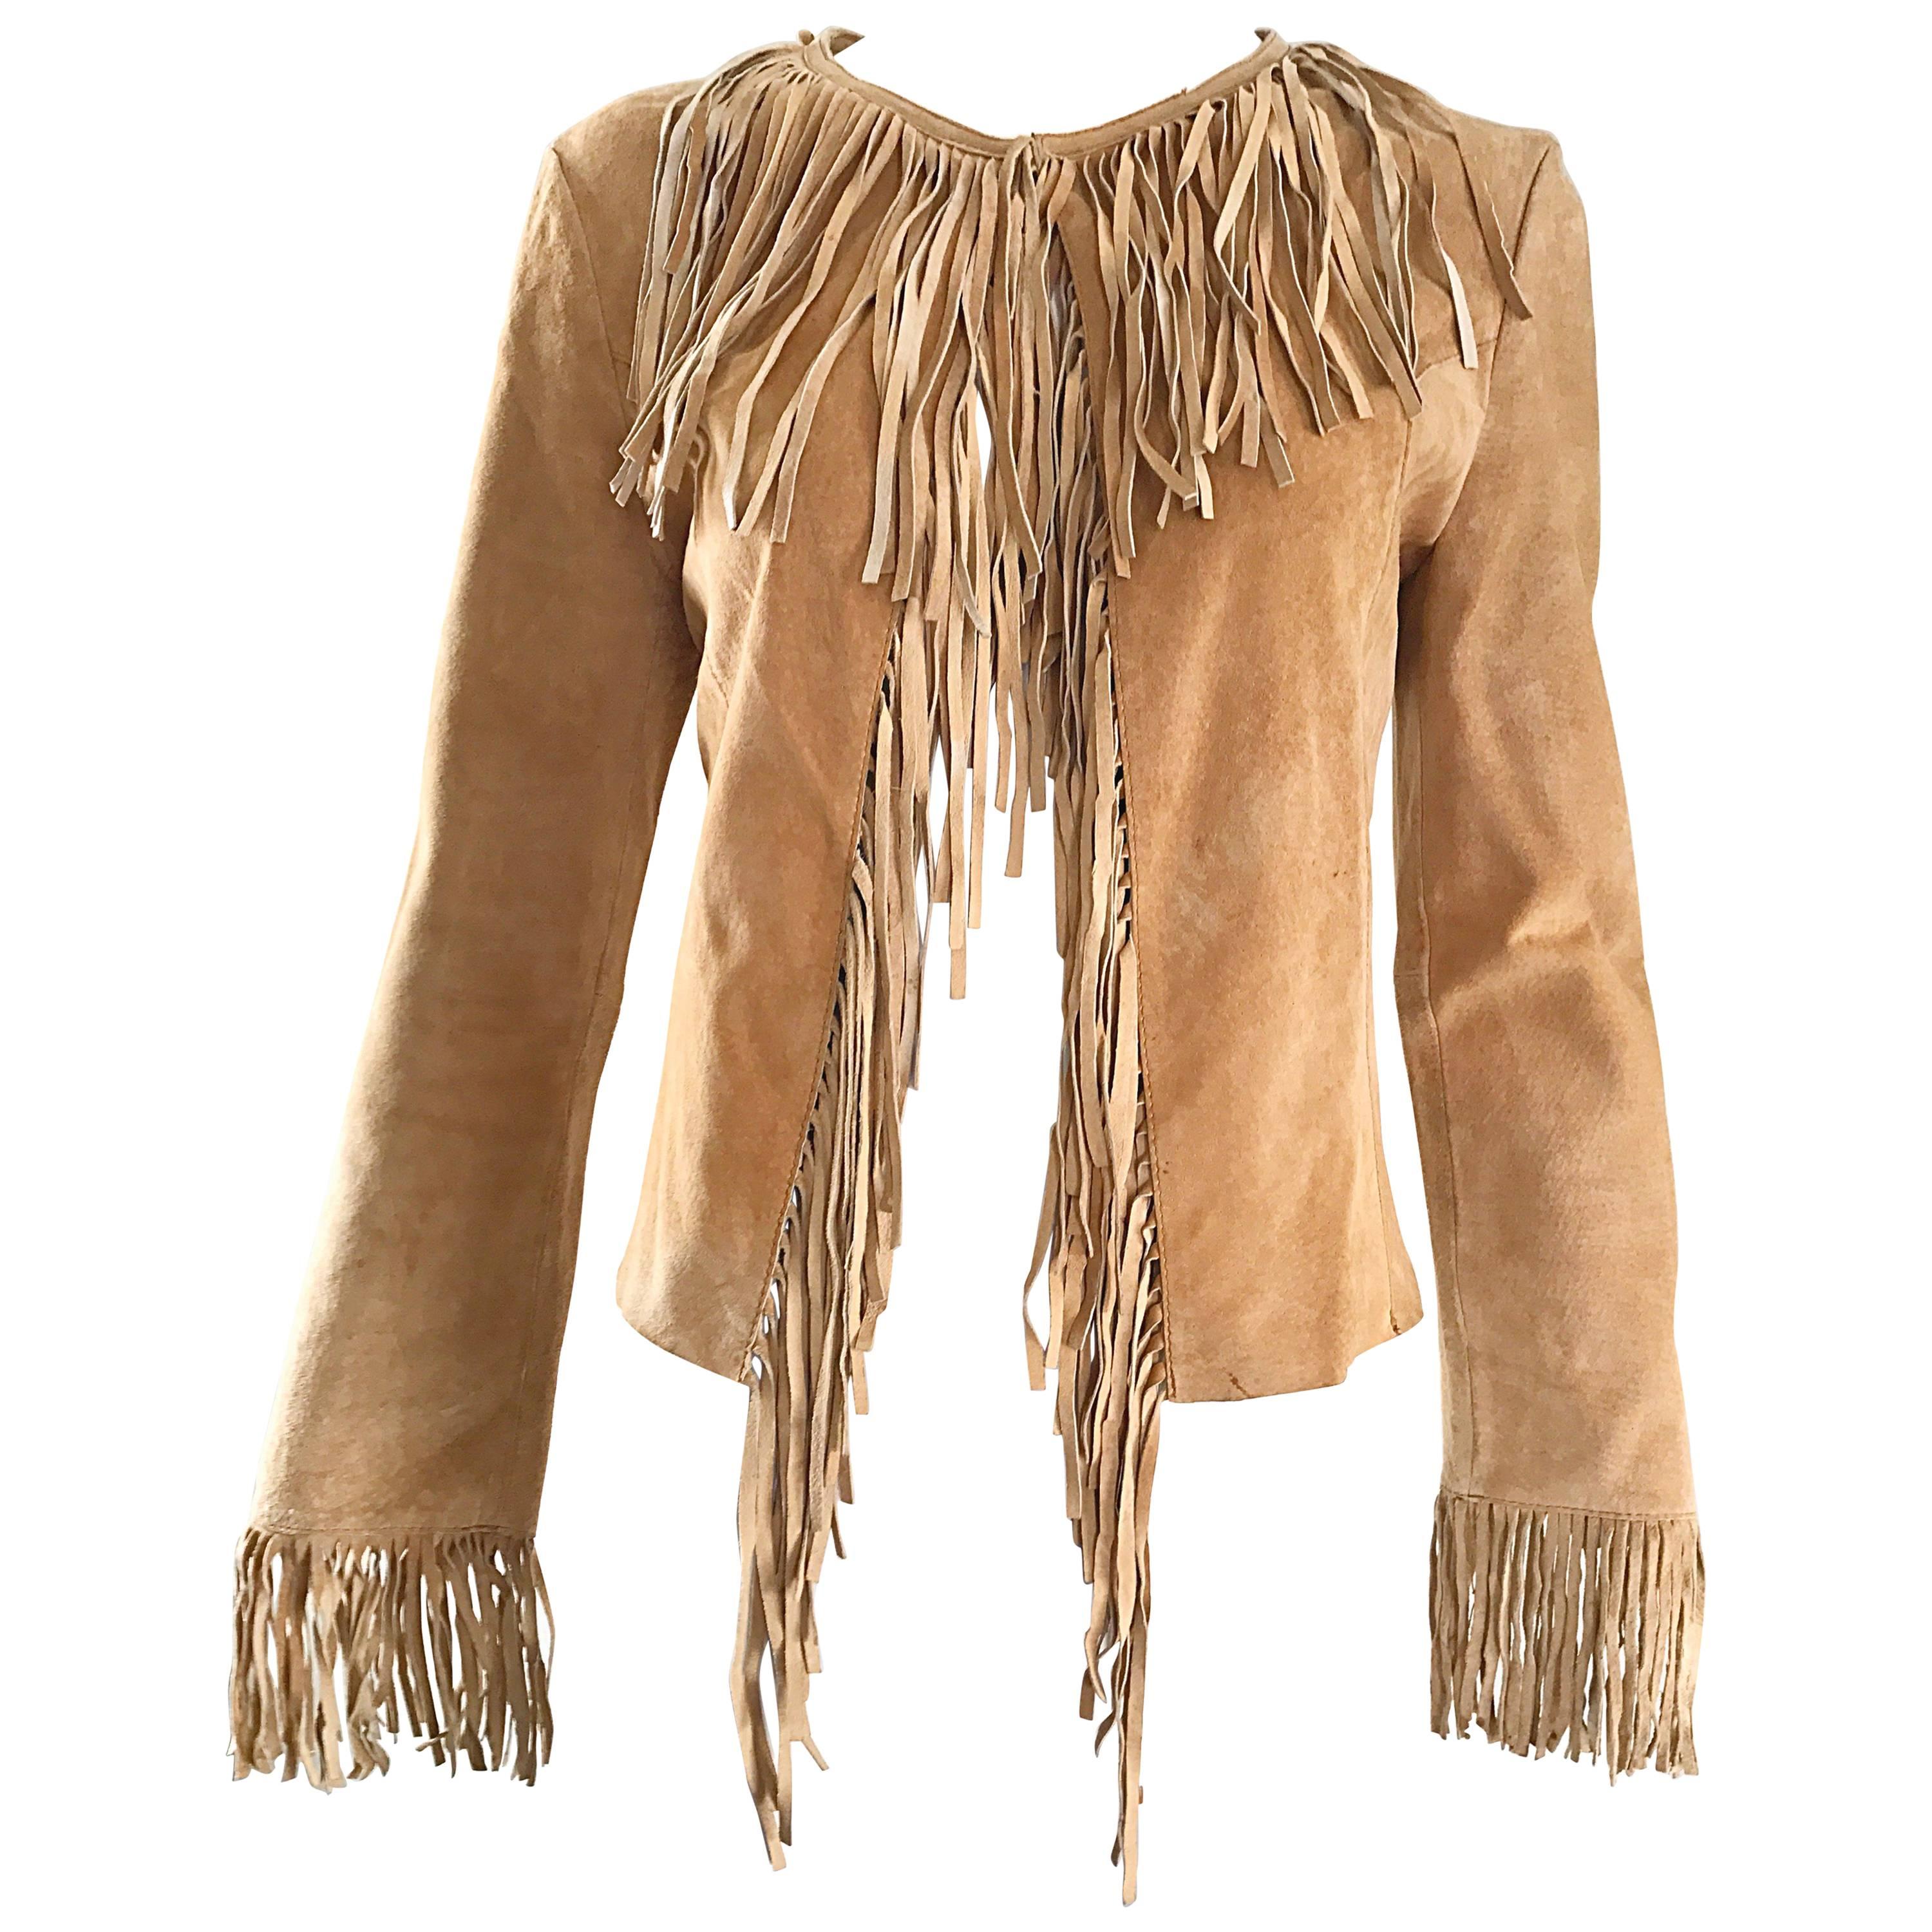 Amazing 1970s Tan Suede Leather Fringe Vintage 70s Light Brown Boho Jacket